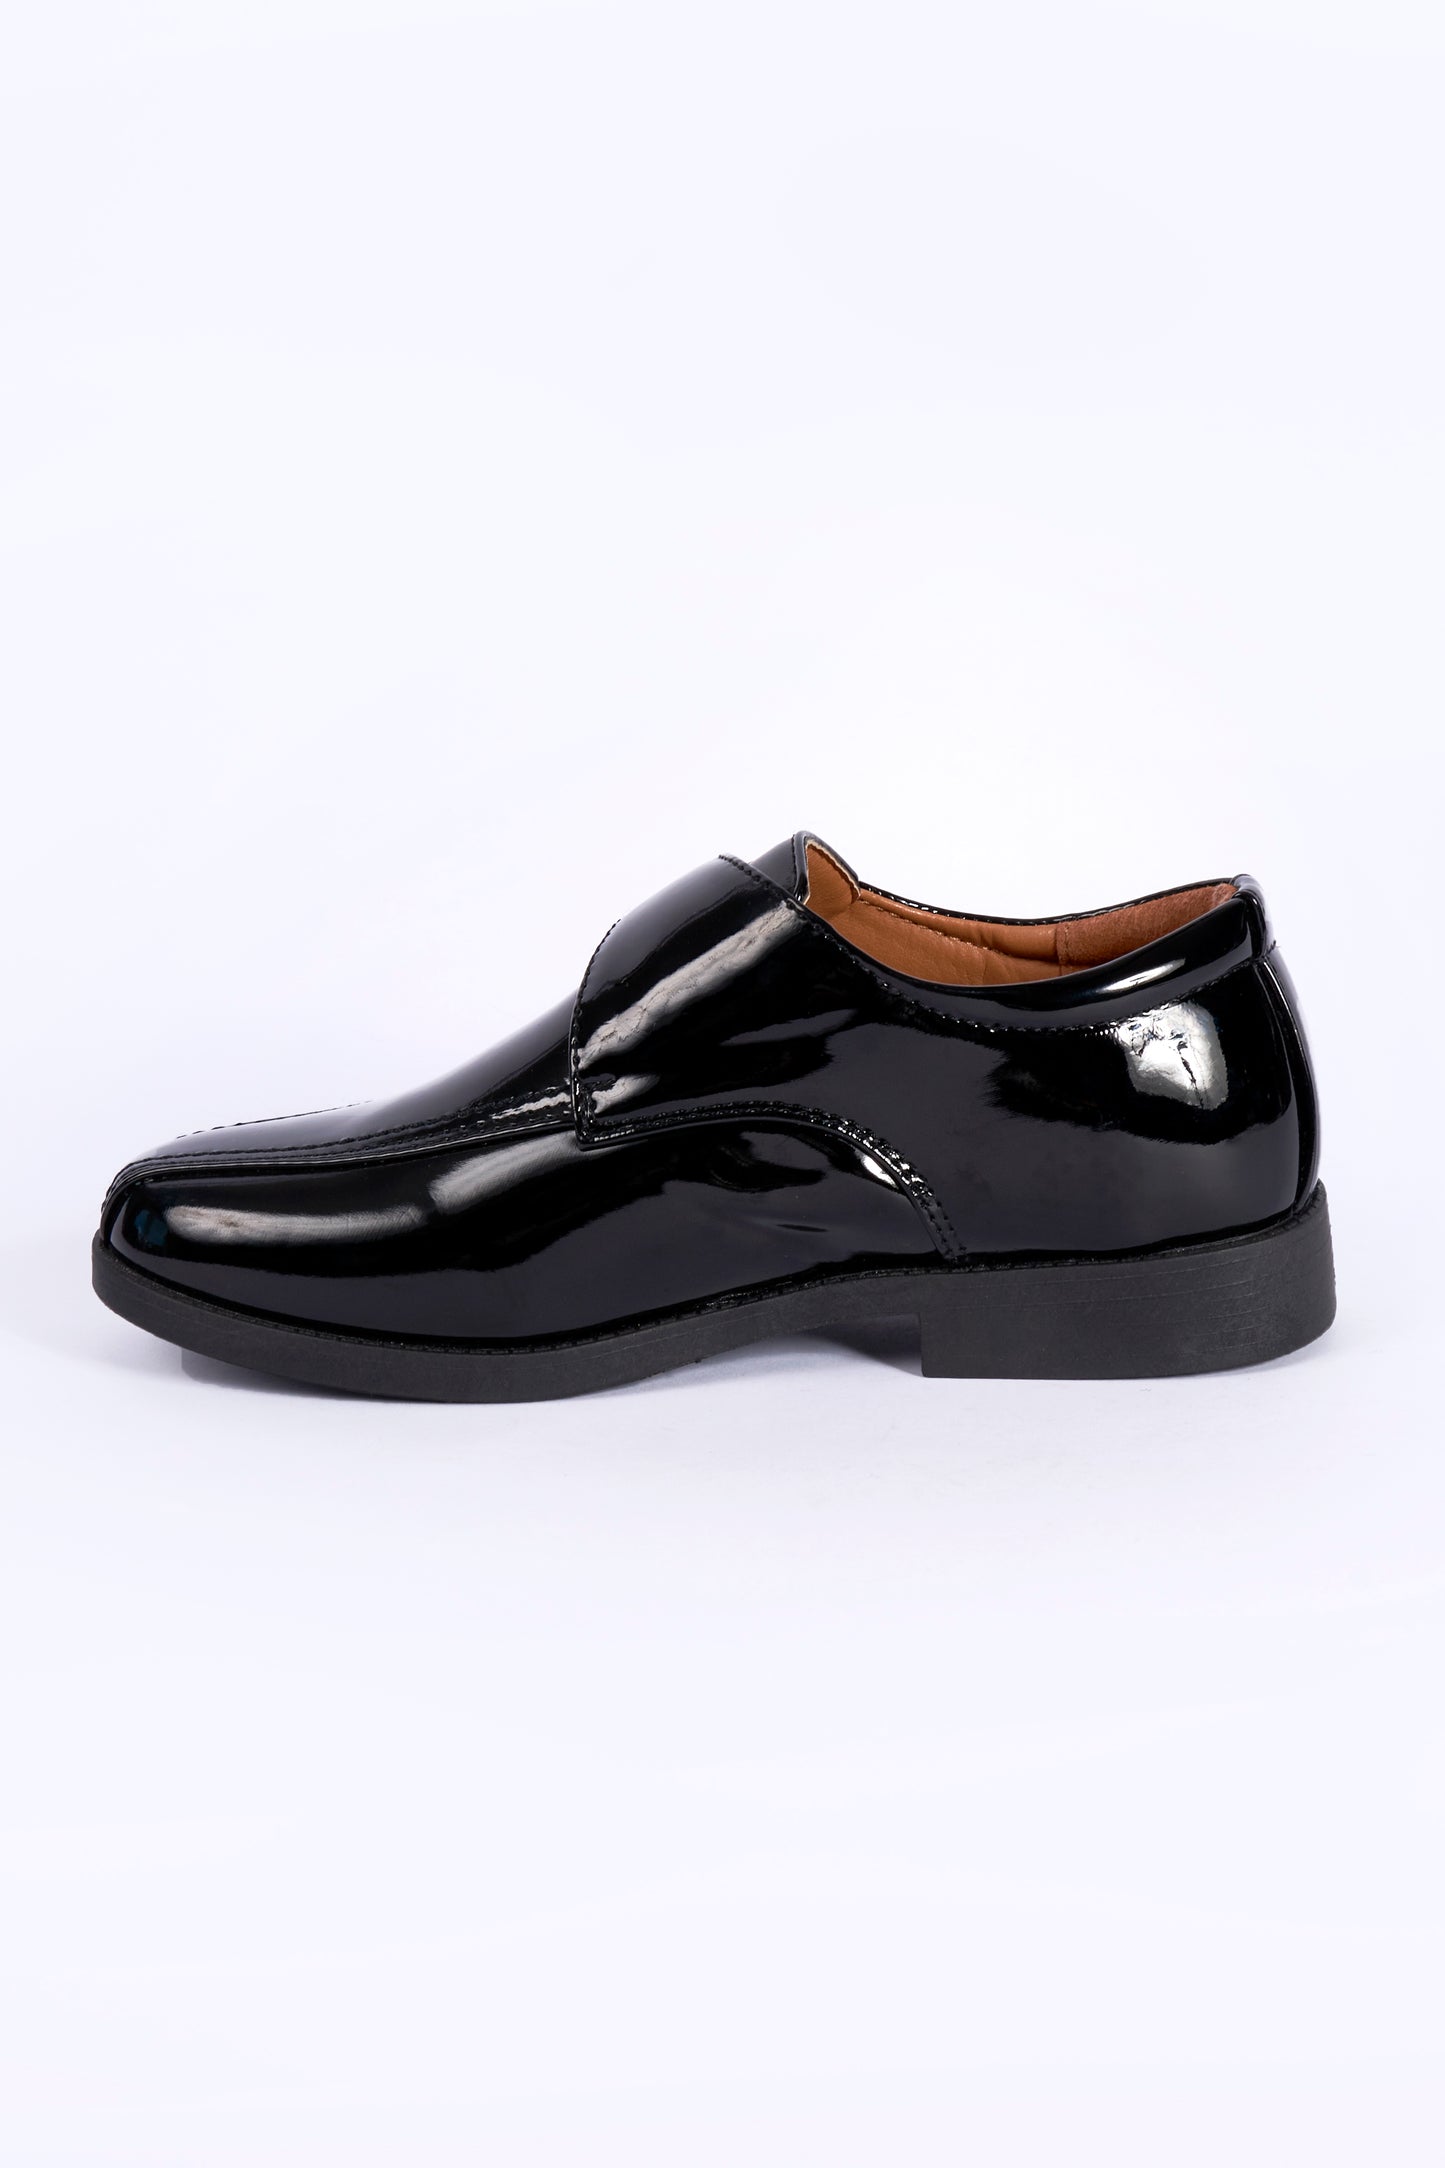 Jacob Black Patent Side Buckle Formal / School Boys Shoe BXT 12X3